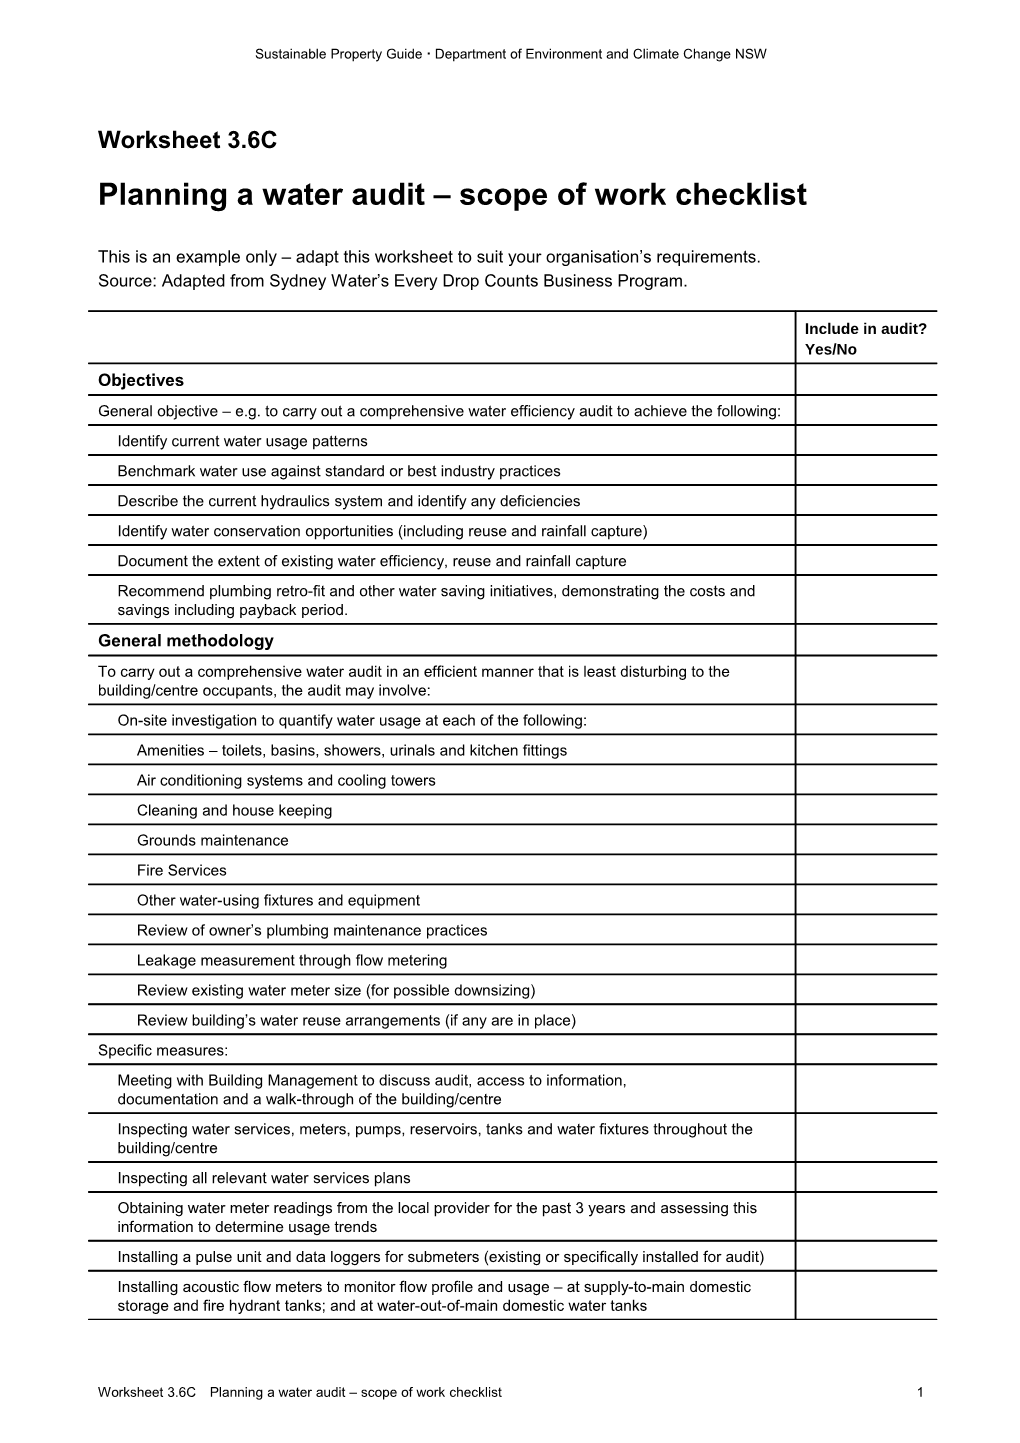 Planning a Water Audit Scope of Work Checklist